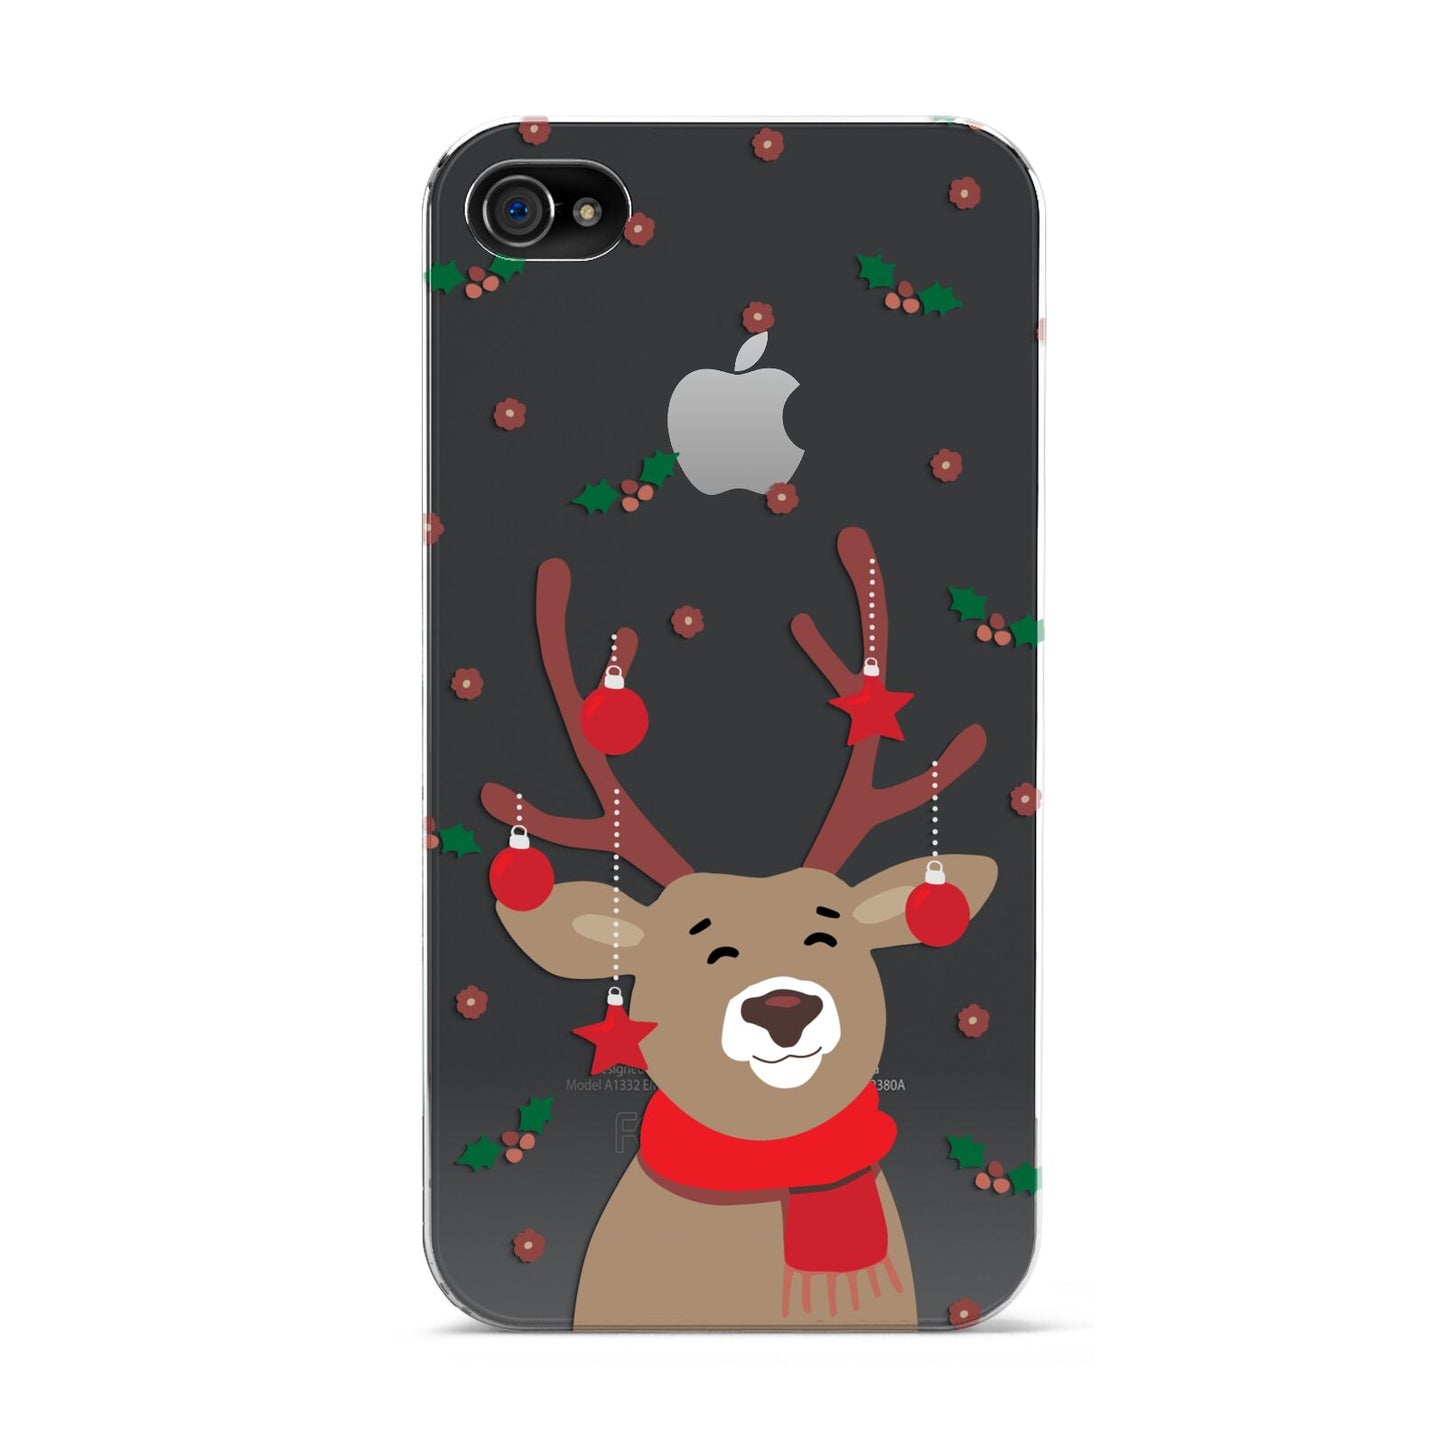 Reindeer Christmas Apple iPhone 4s Case